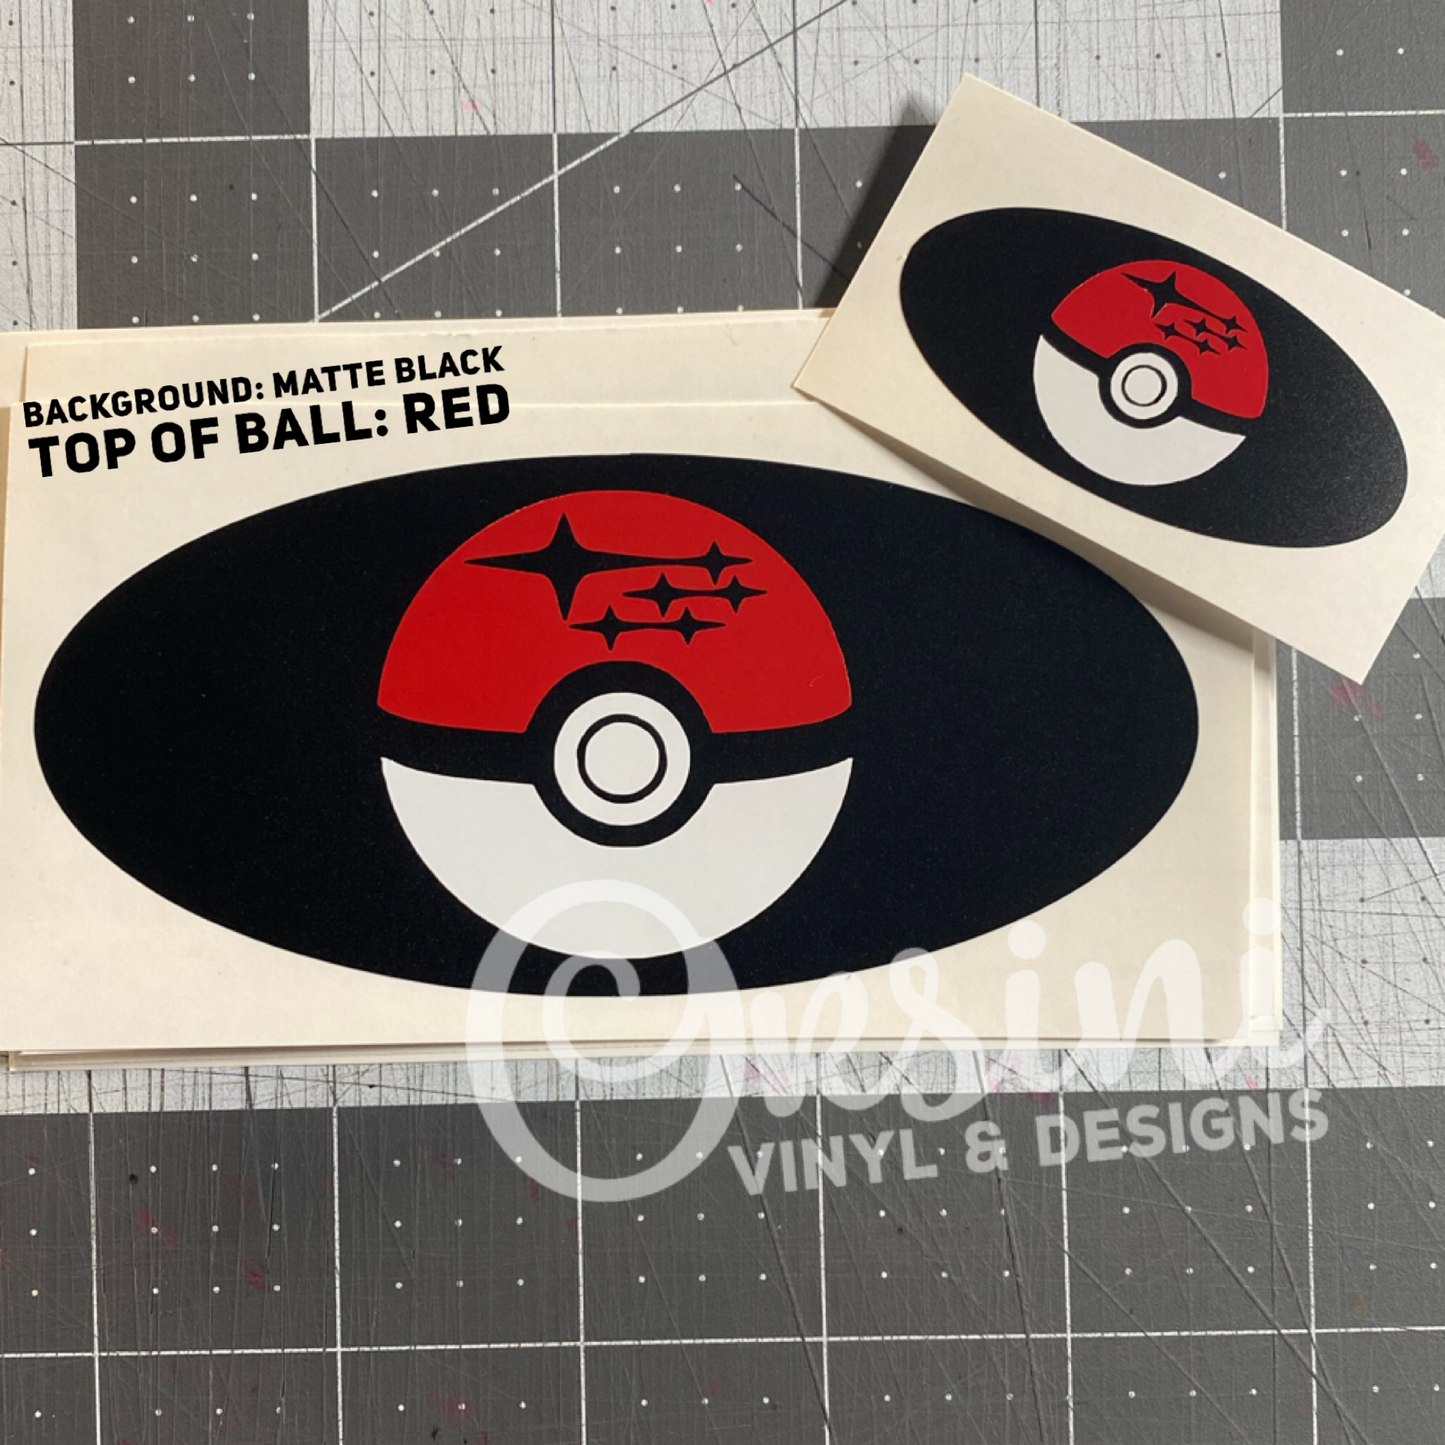 Pokemon Ball Emblem Overlay Decal Set